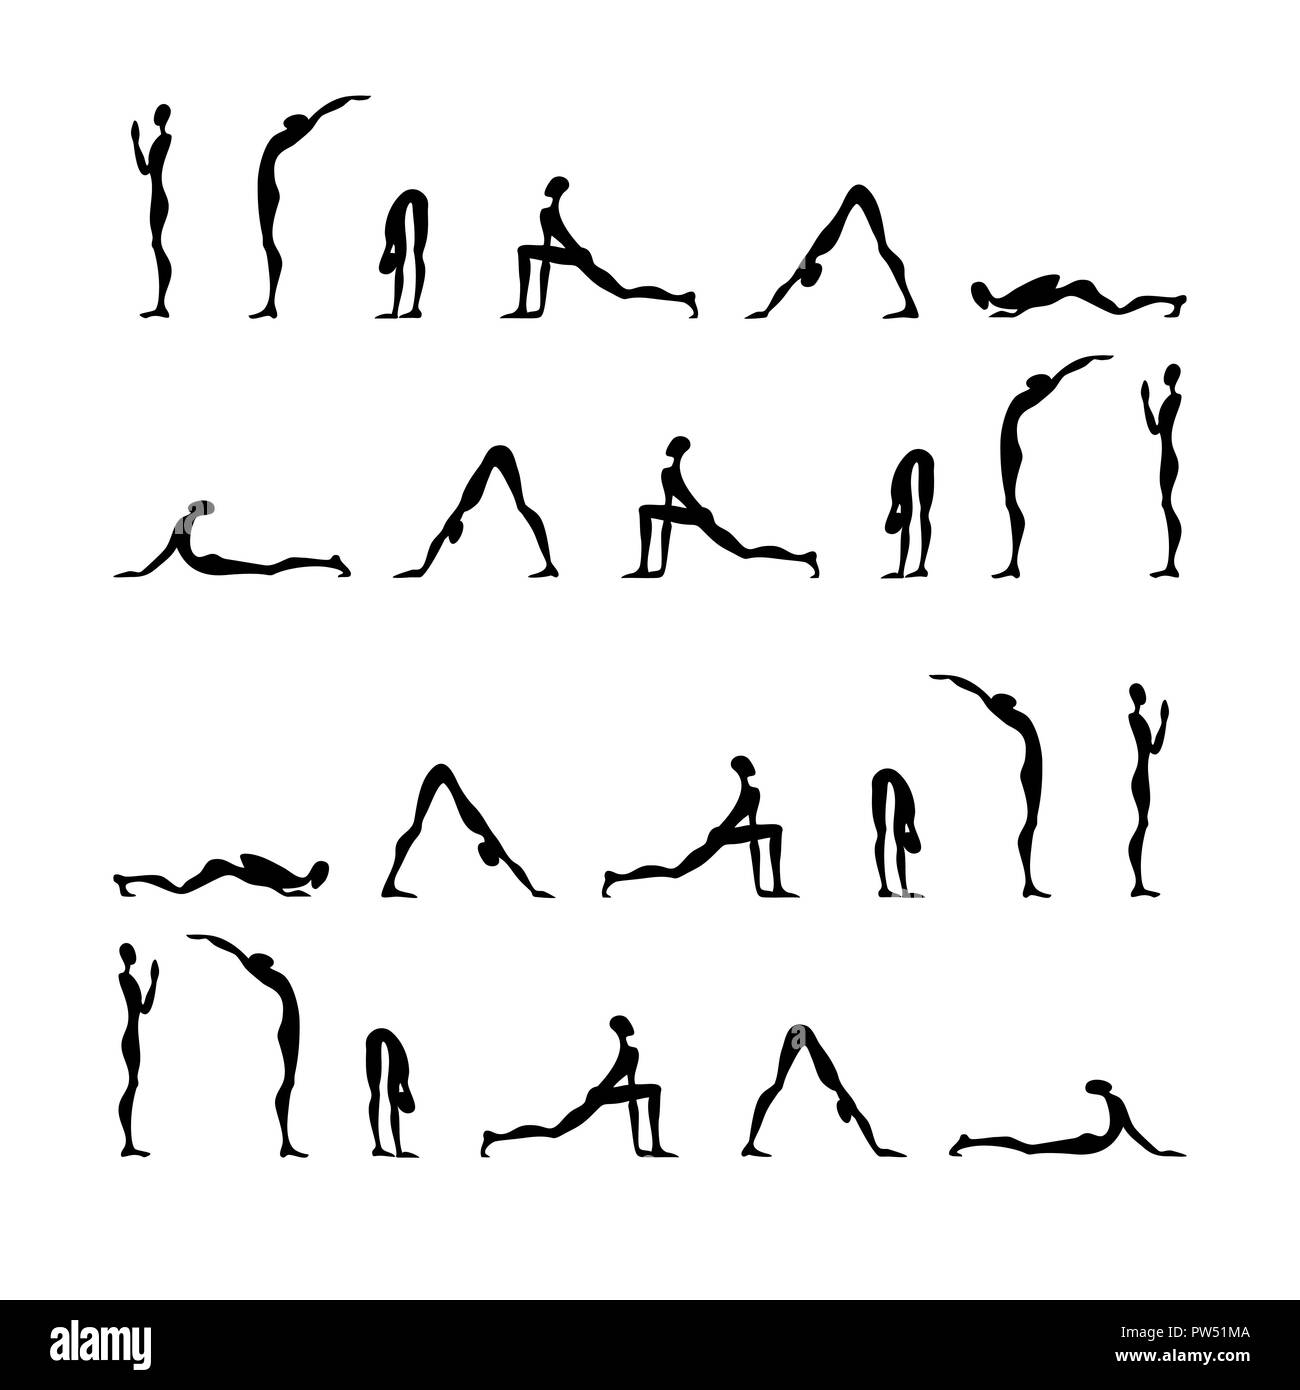 Yoga for beginners poses stick figure set Stock Vector Image & Art